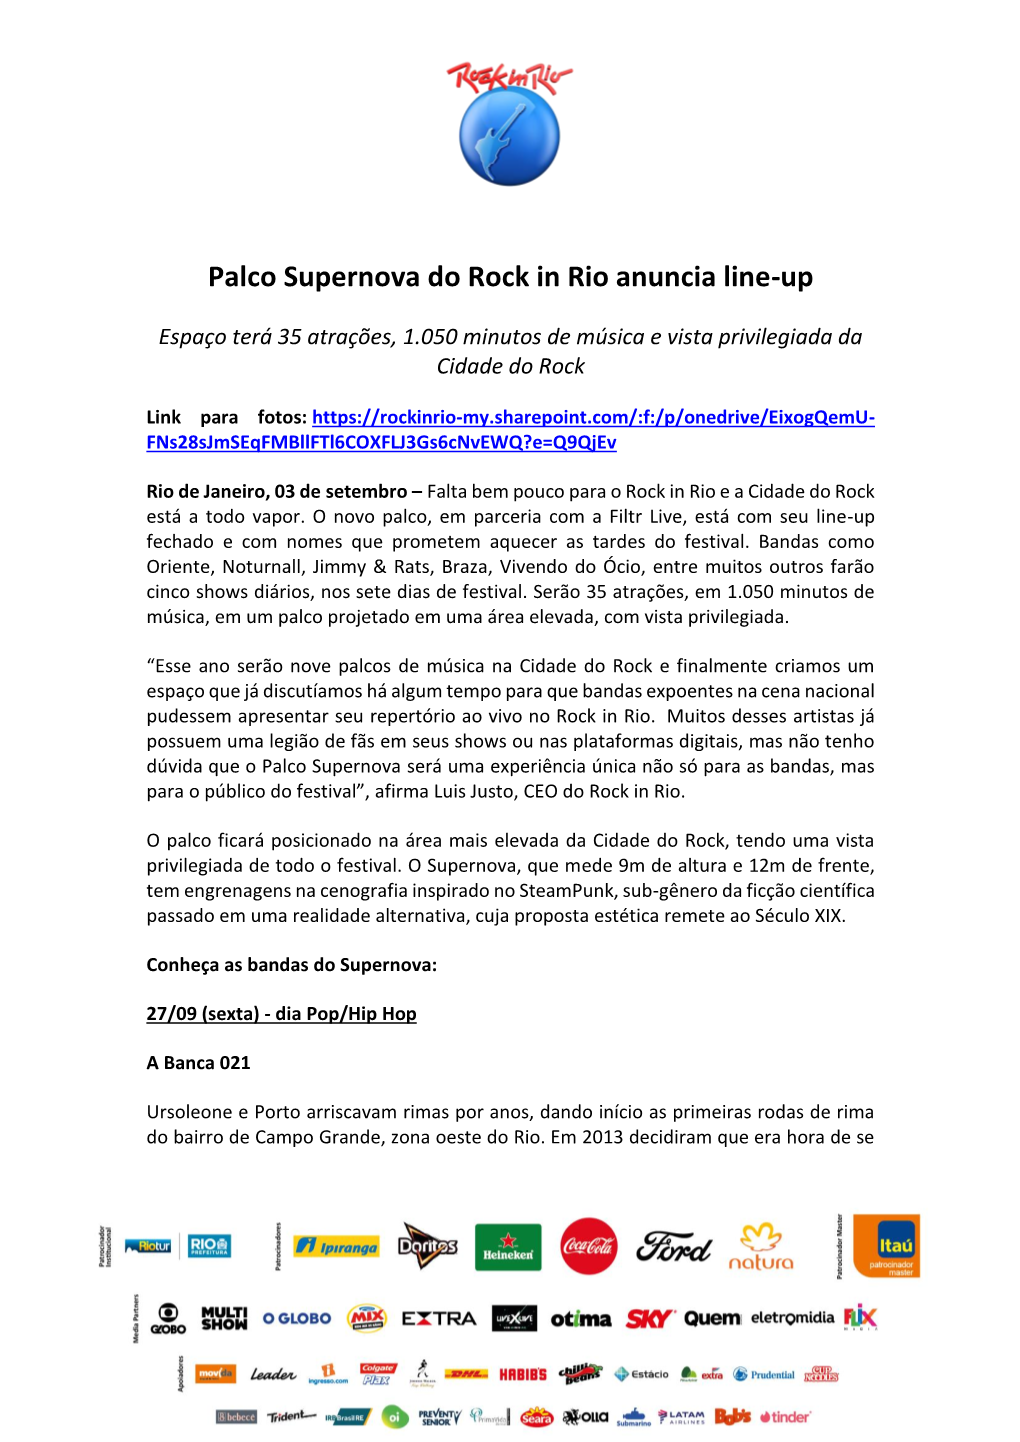 Palco Supernova Do Rock in Rio Anuncia Line-Up